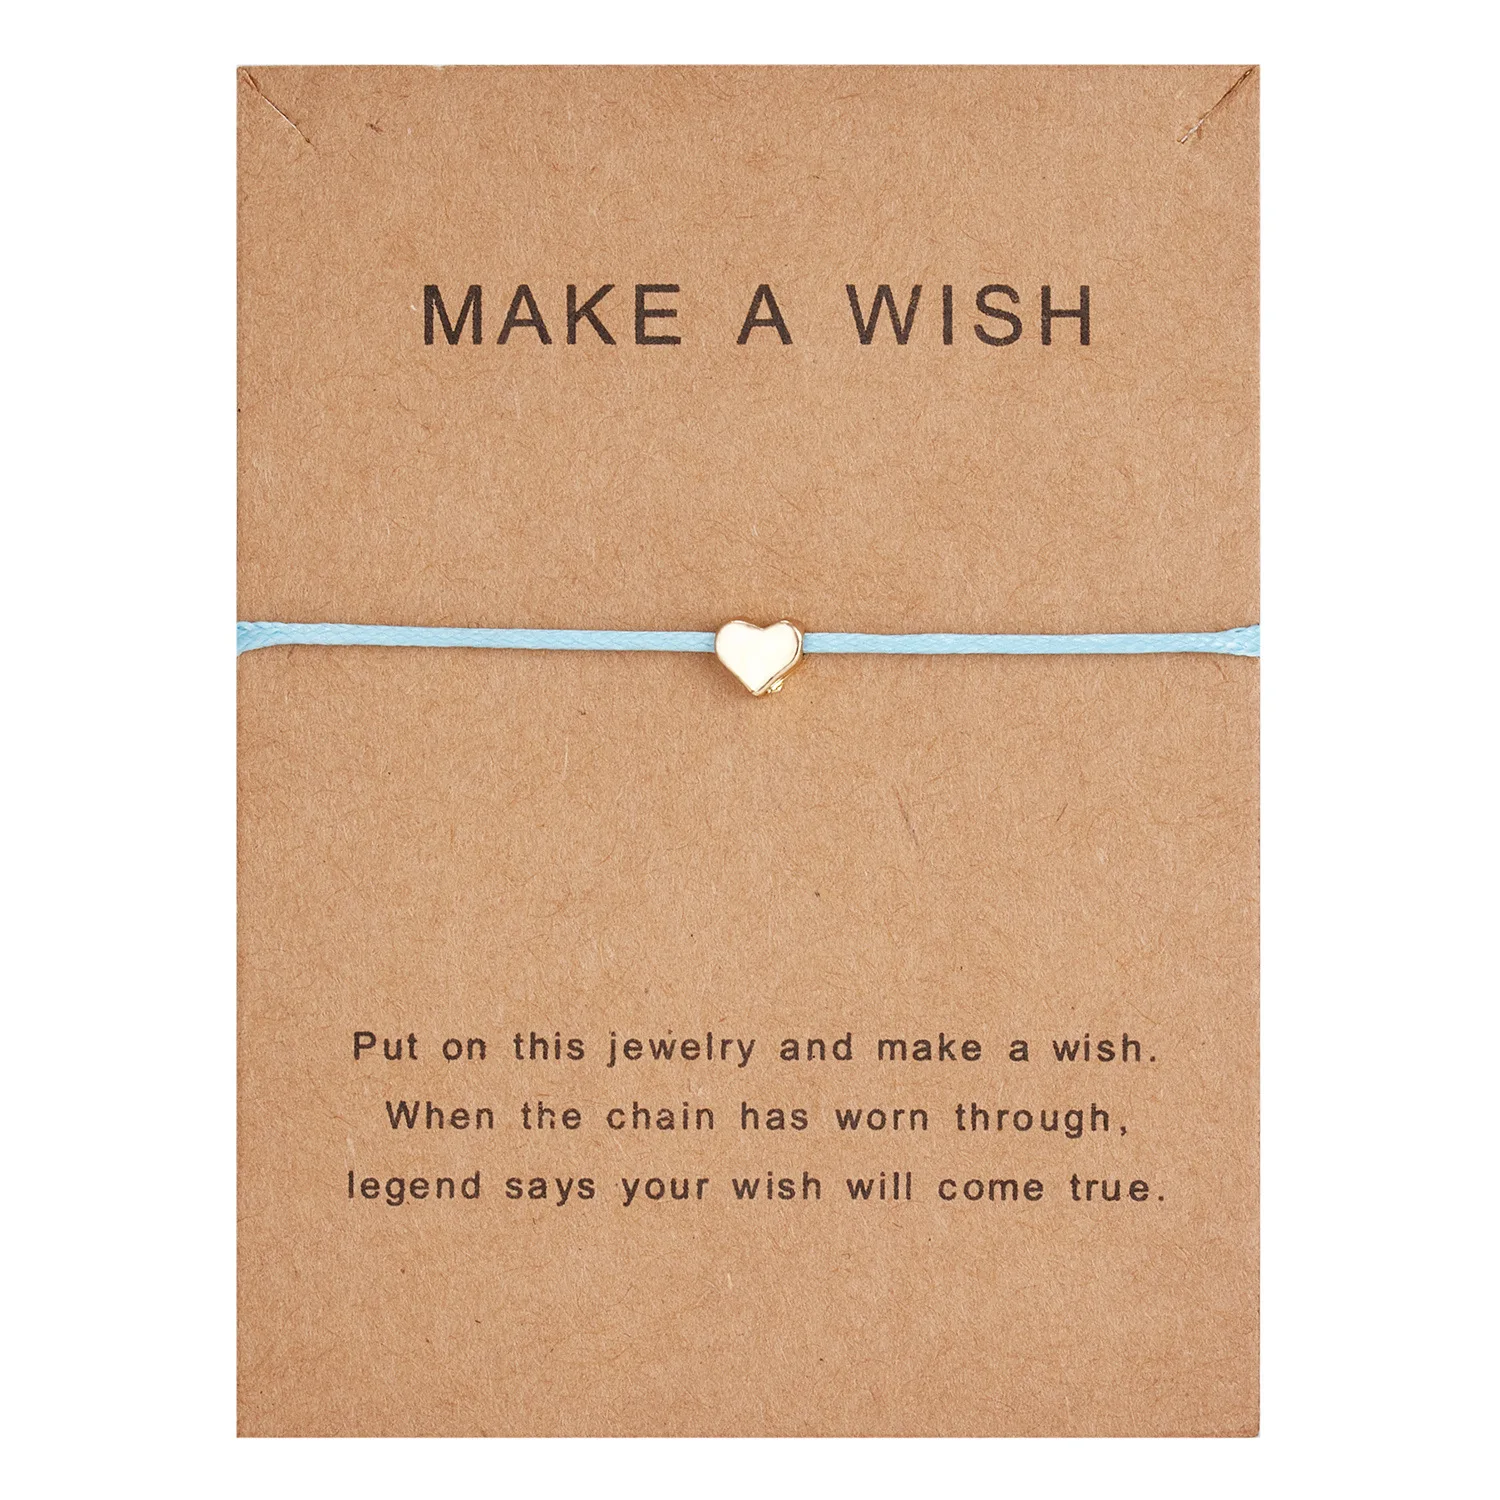 Make A Wish Heart Charm Bracelet Femme Adjustable Lucky Star Cross Butterfly Red String Women Kid Friendship Jewelry Card Gift